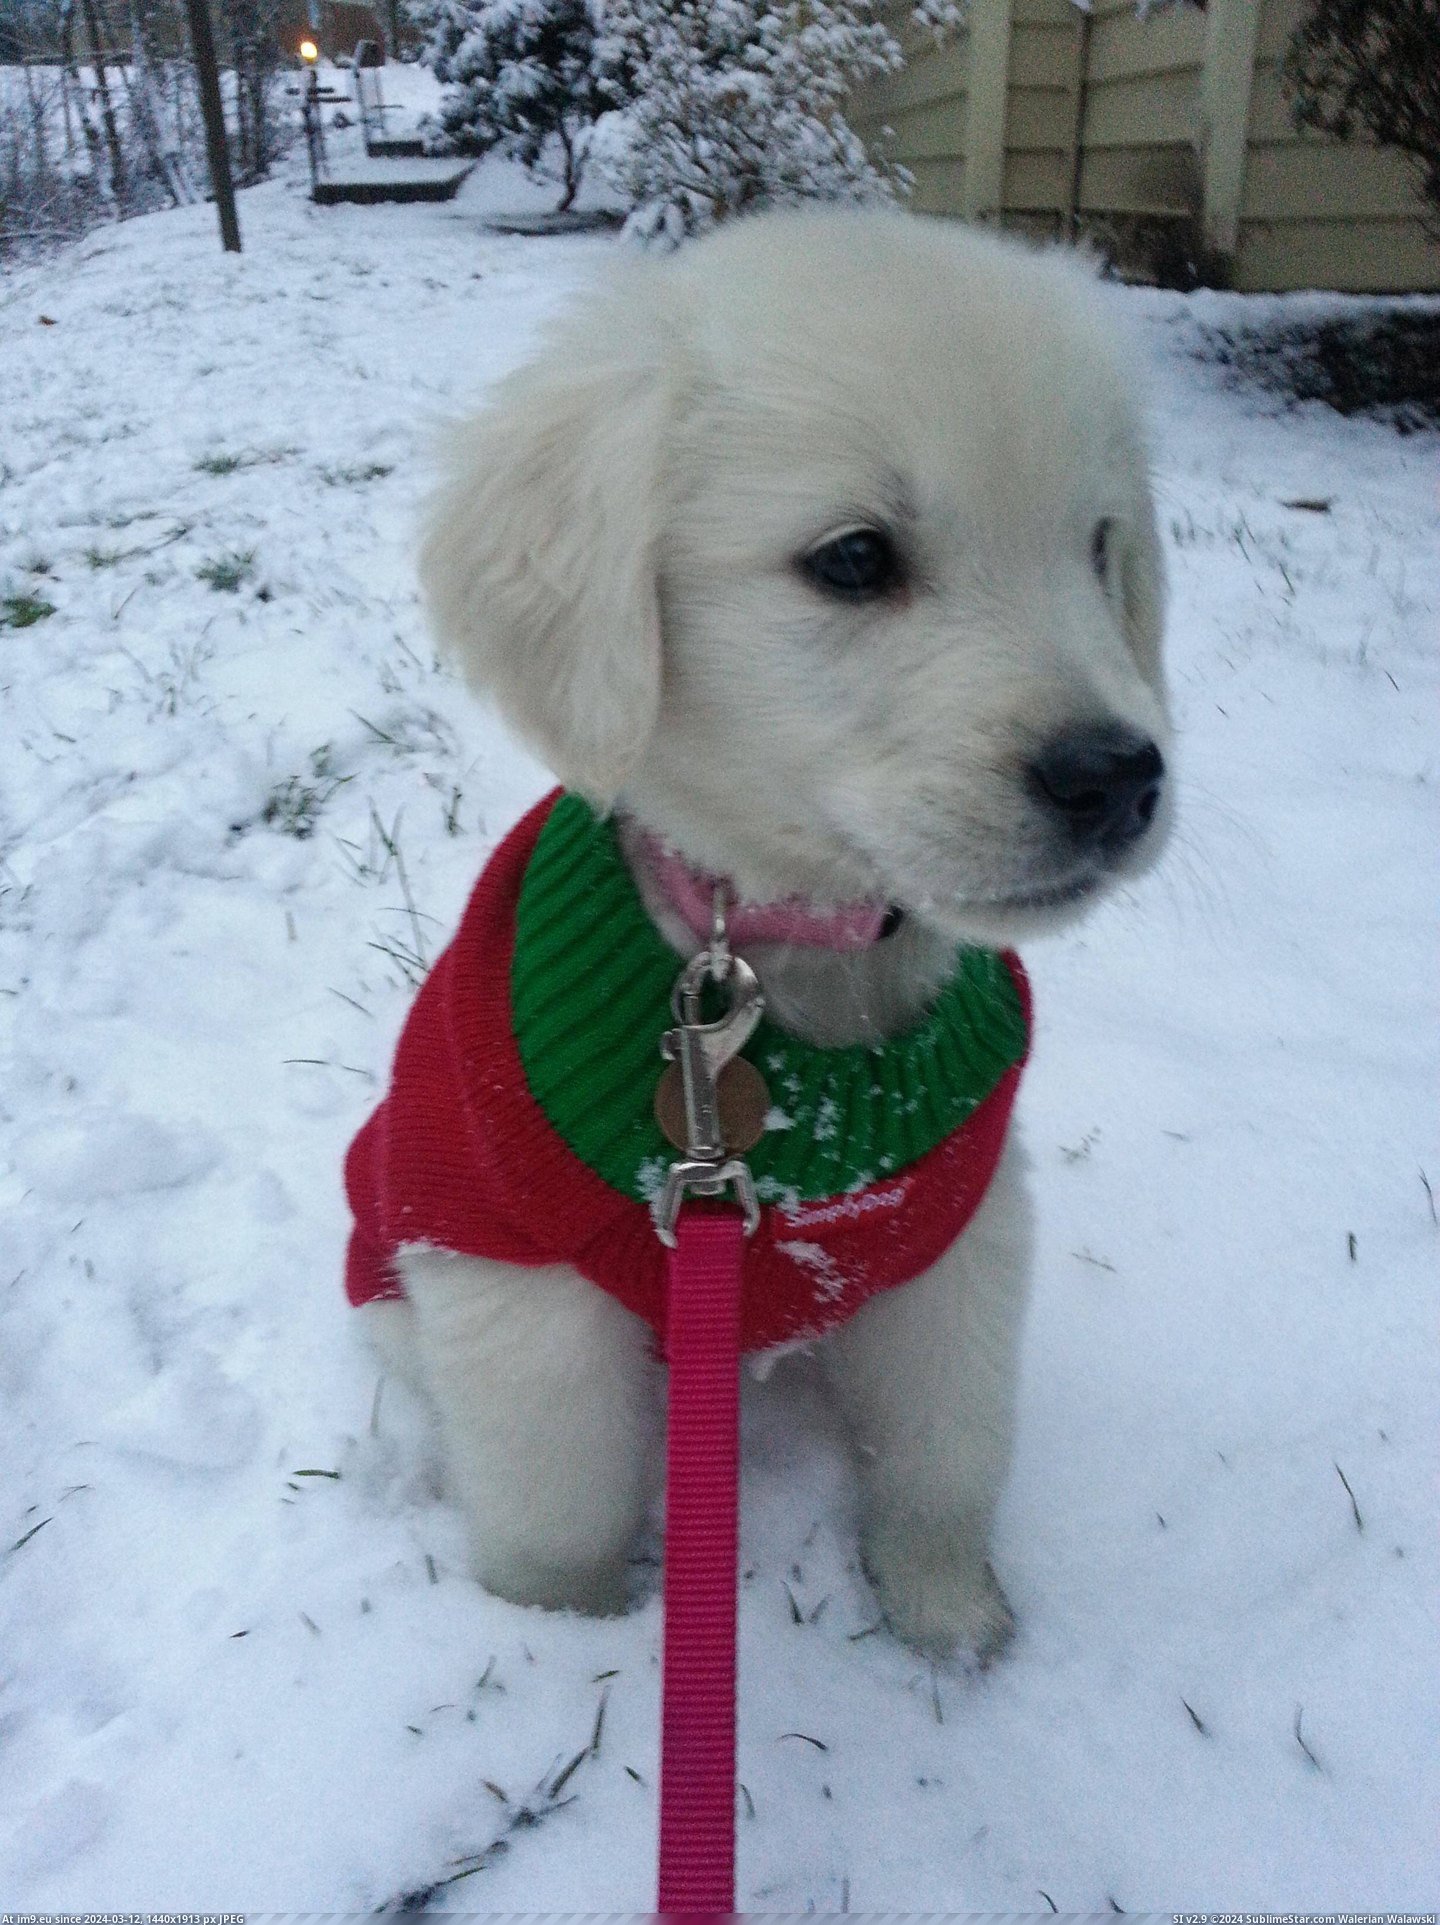 #Puppy #Snowfall #Enjoyed [Aww] My puppy enjoyed her first snowfall! Pic. (Изображение из альбом My r/AWW favs))